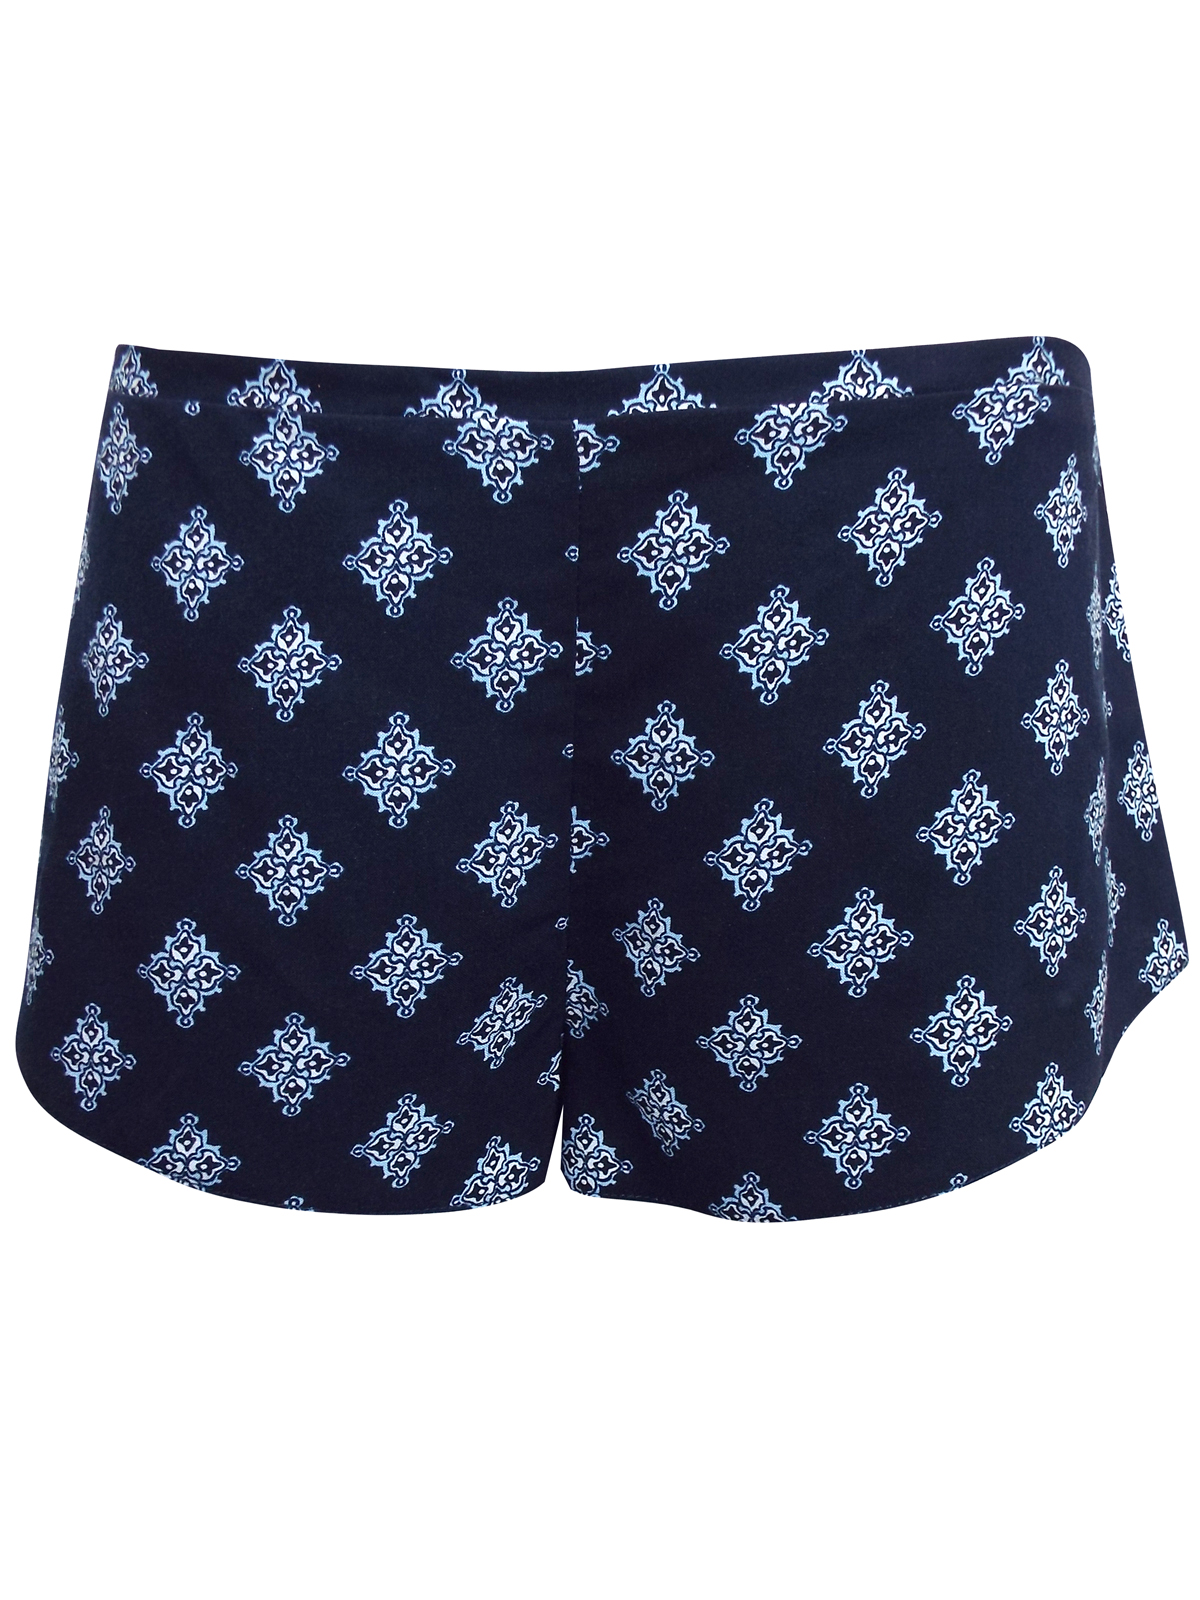 ASOS NAVY Tile Printed Satin Pyjama Shorts - Size 4 to 12